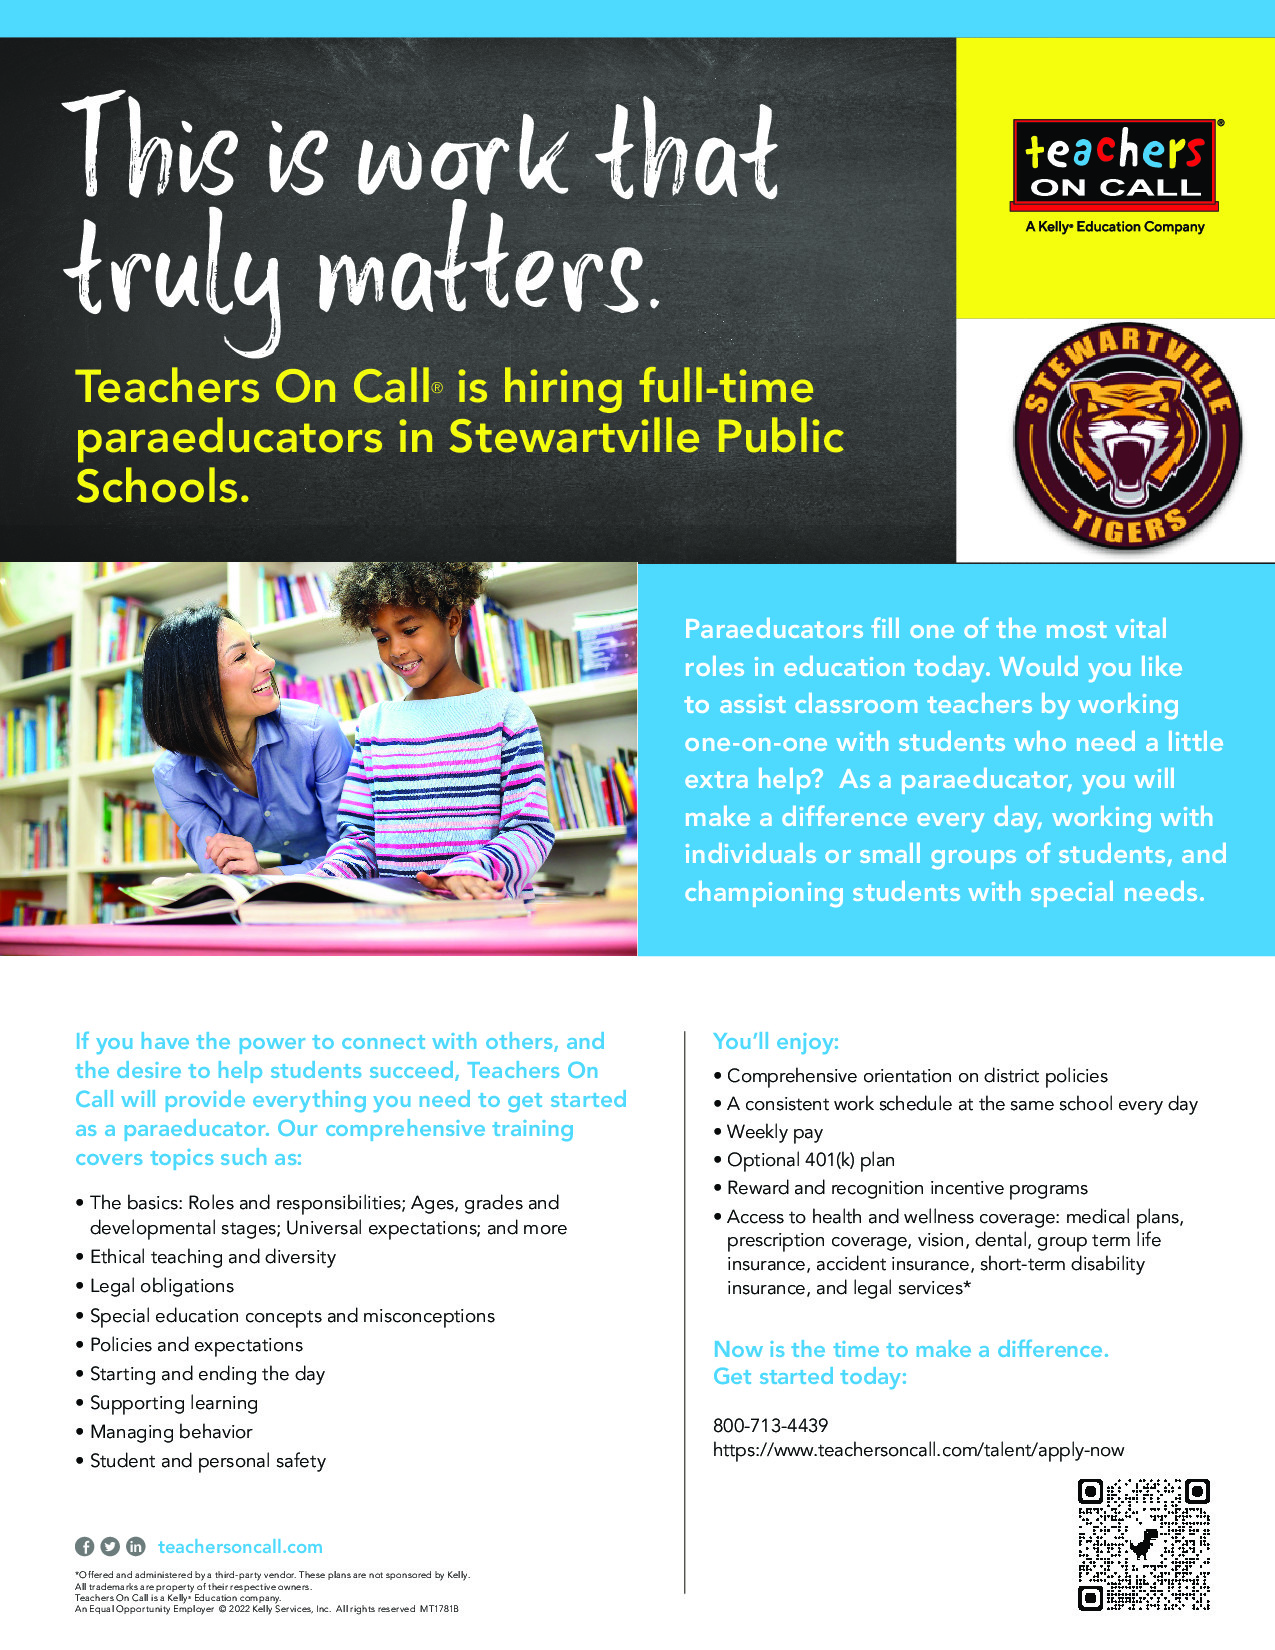 Teachers on Call (TOC) Stewartville Public Schools